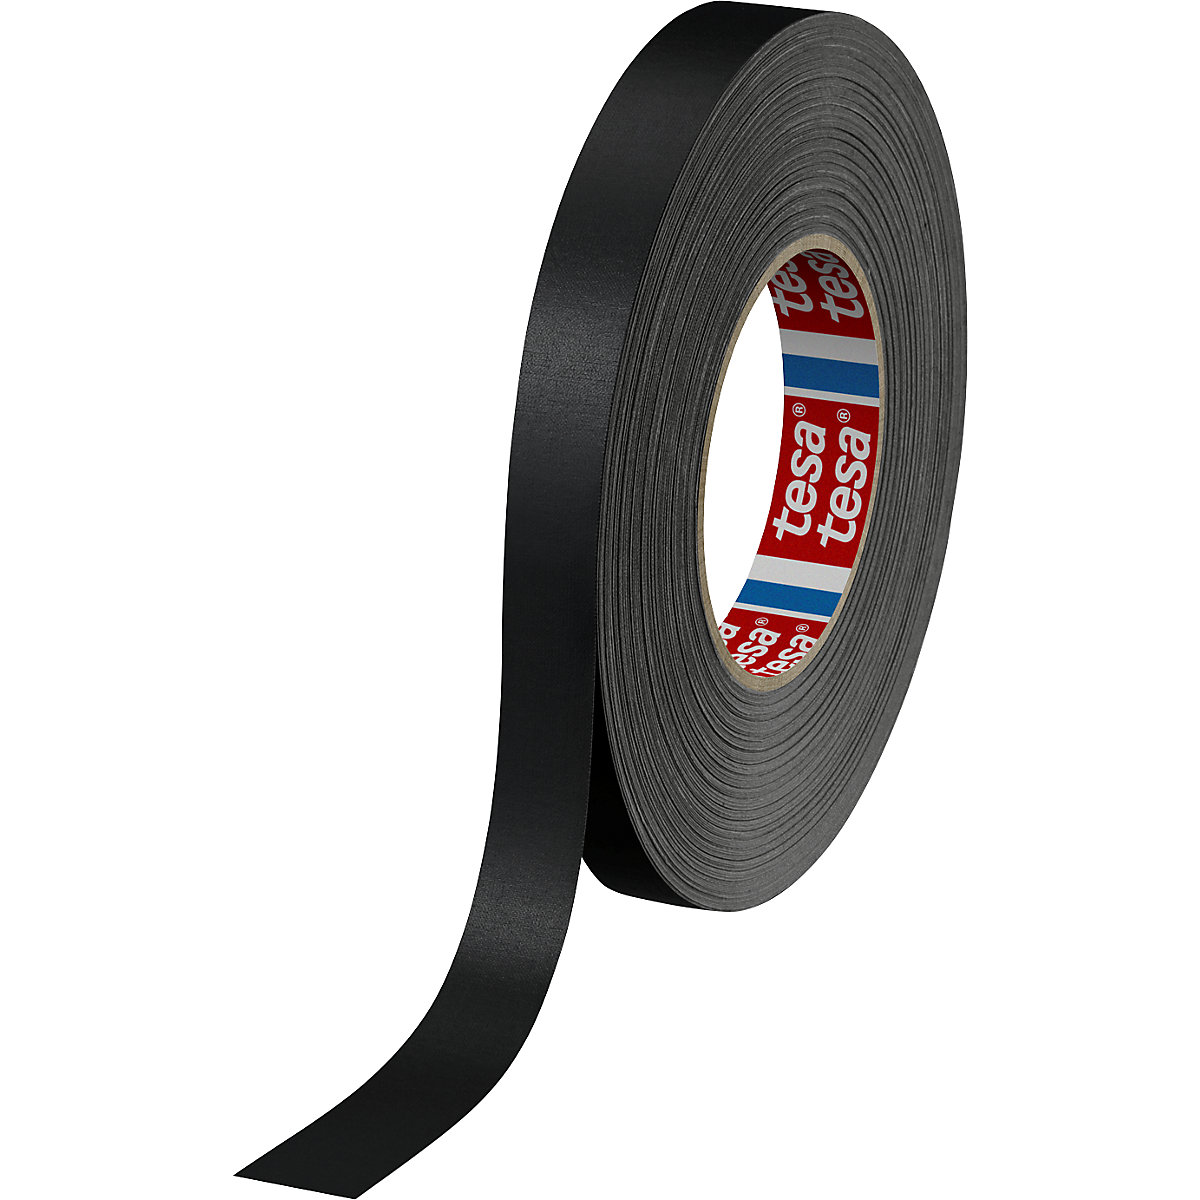 Cinta de tejido – tesa, tesaband® 4651 Premium, UE 48 rollos, negro, anchura de cinta 19 mm-1